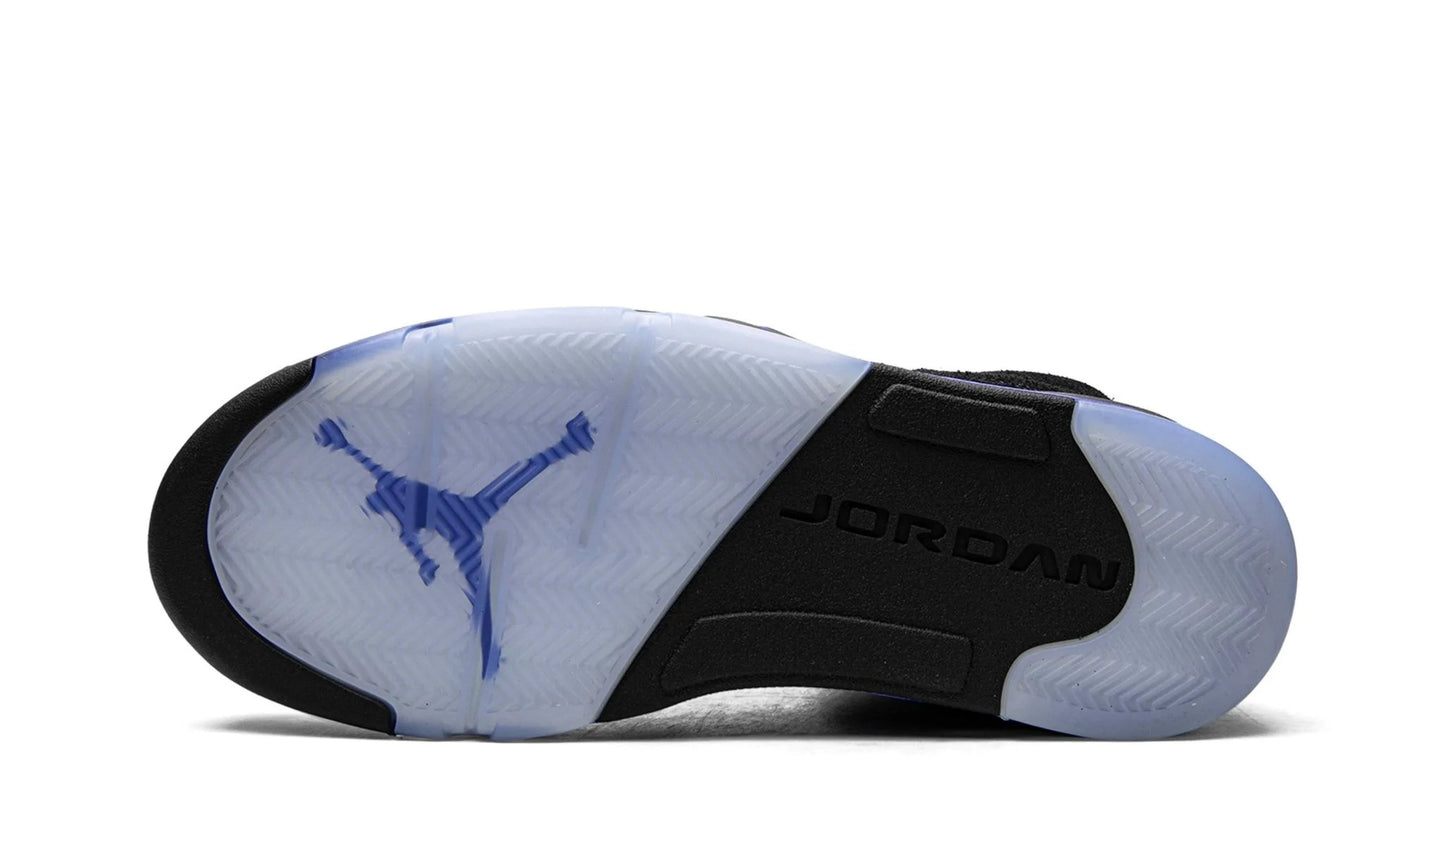 Jordan 5 Racer Blue Bottom Outsole